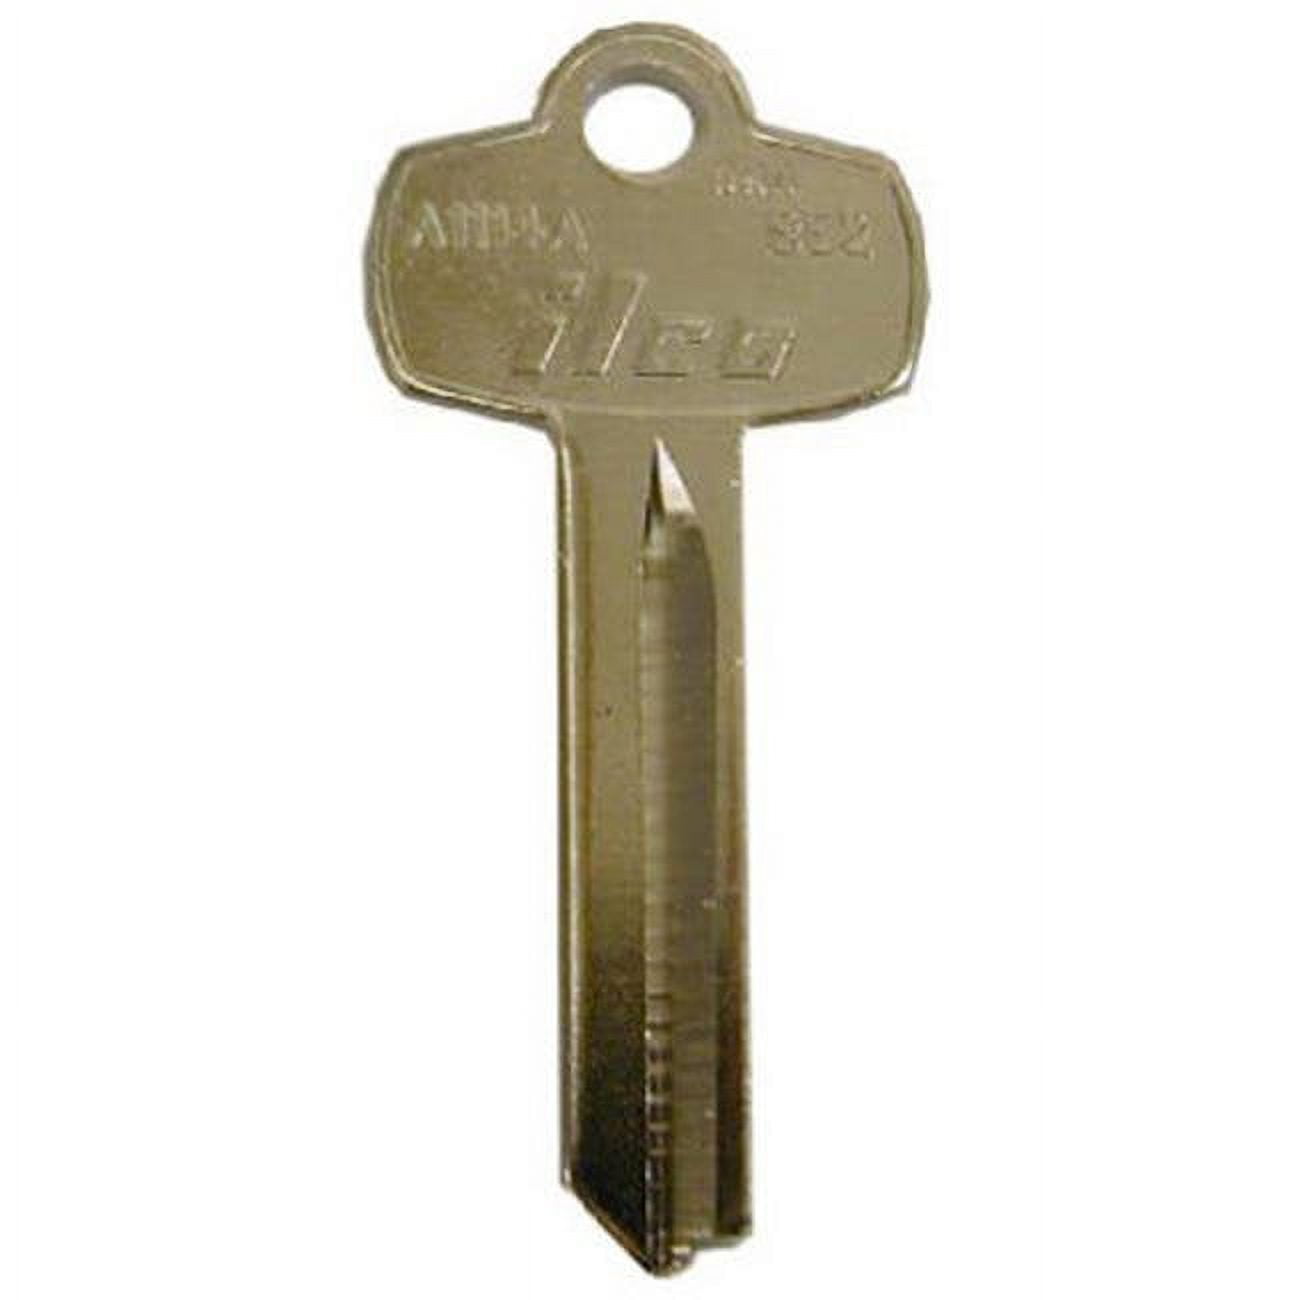 YOUTHINK Vintage Keys,69pcs Assorted Antique Vintage Bronze Skeleton Keys  Fancy Heart Bow Jewelry,Bronze Keys 